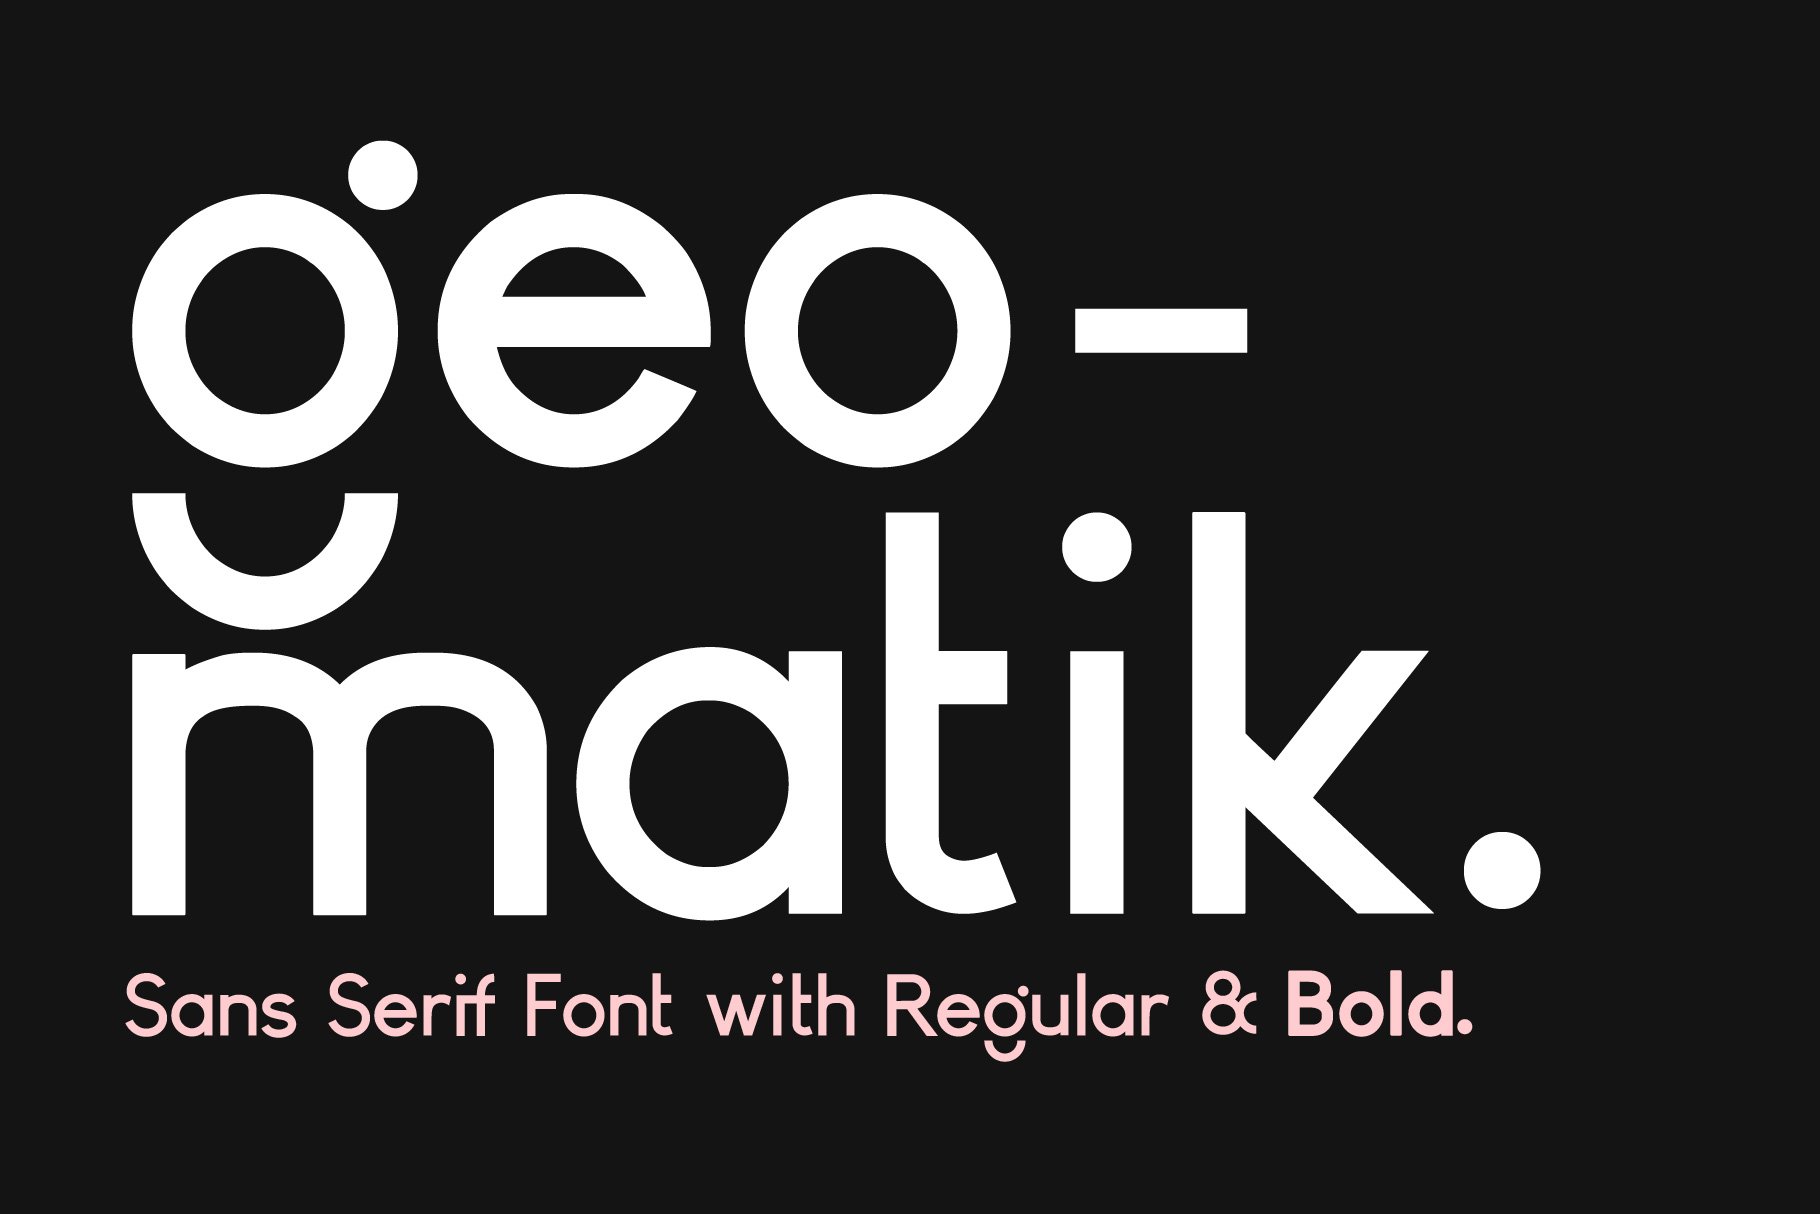 Geomatik - Modern Sans Serif Font cover image.